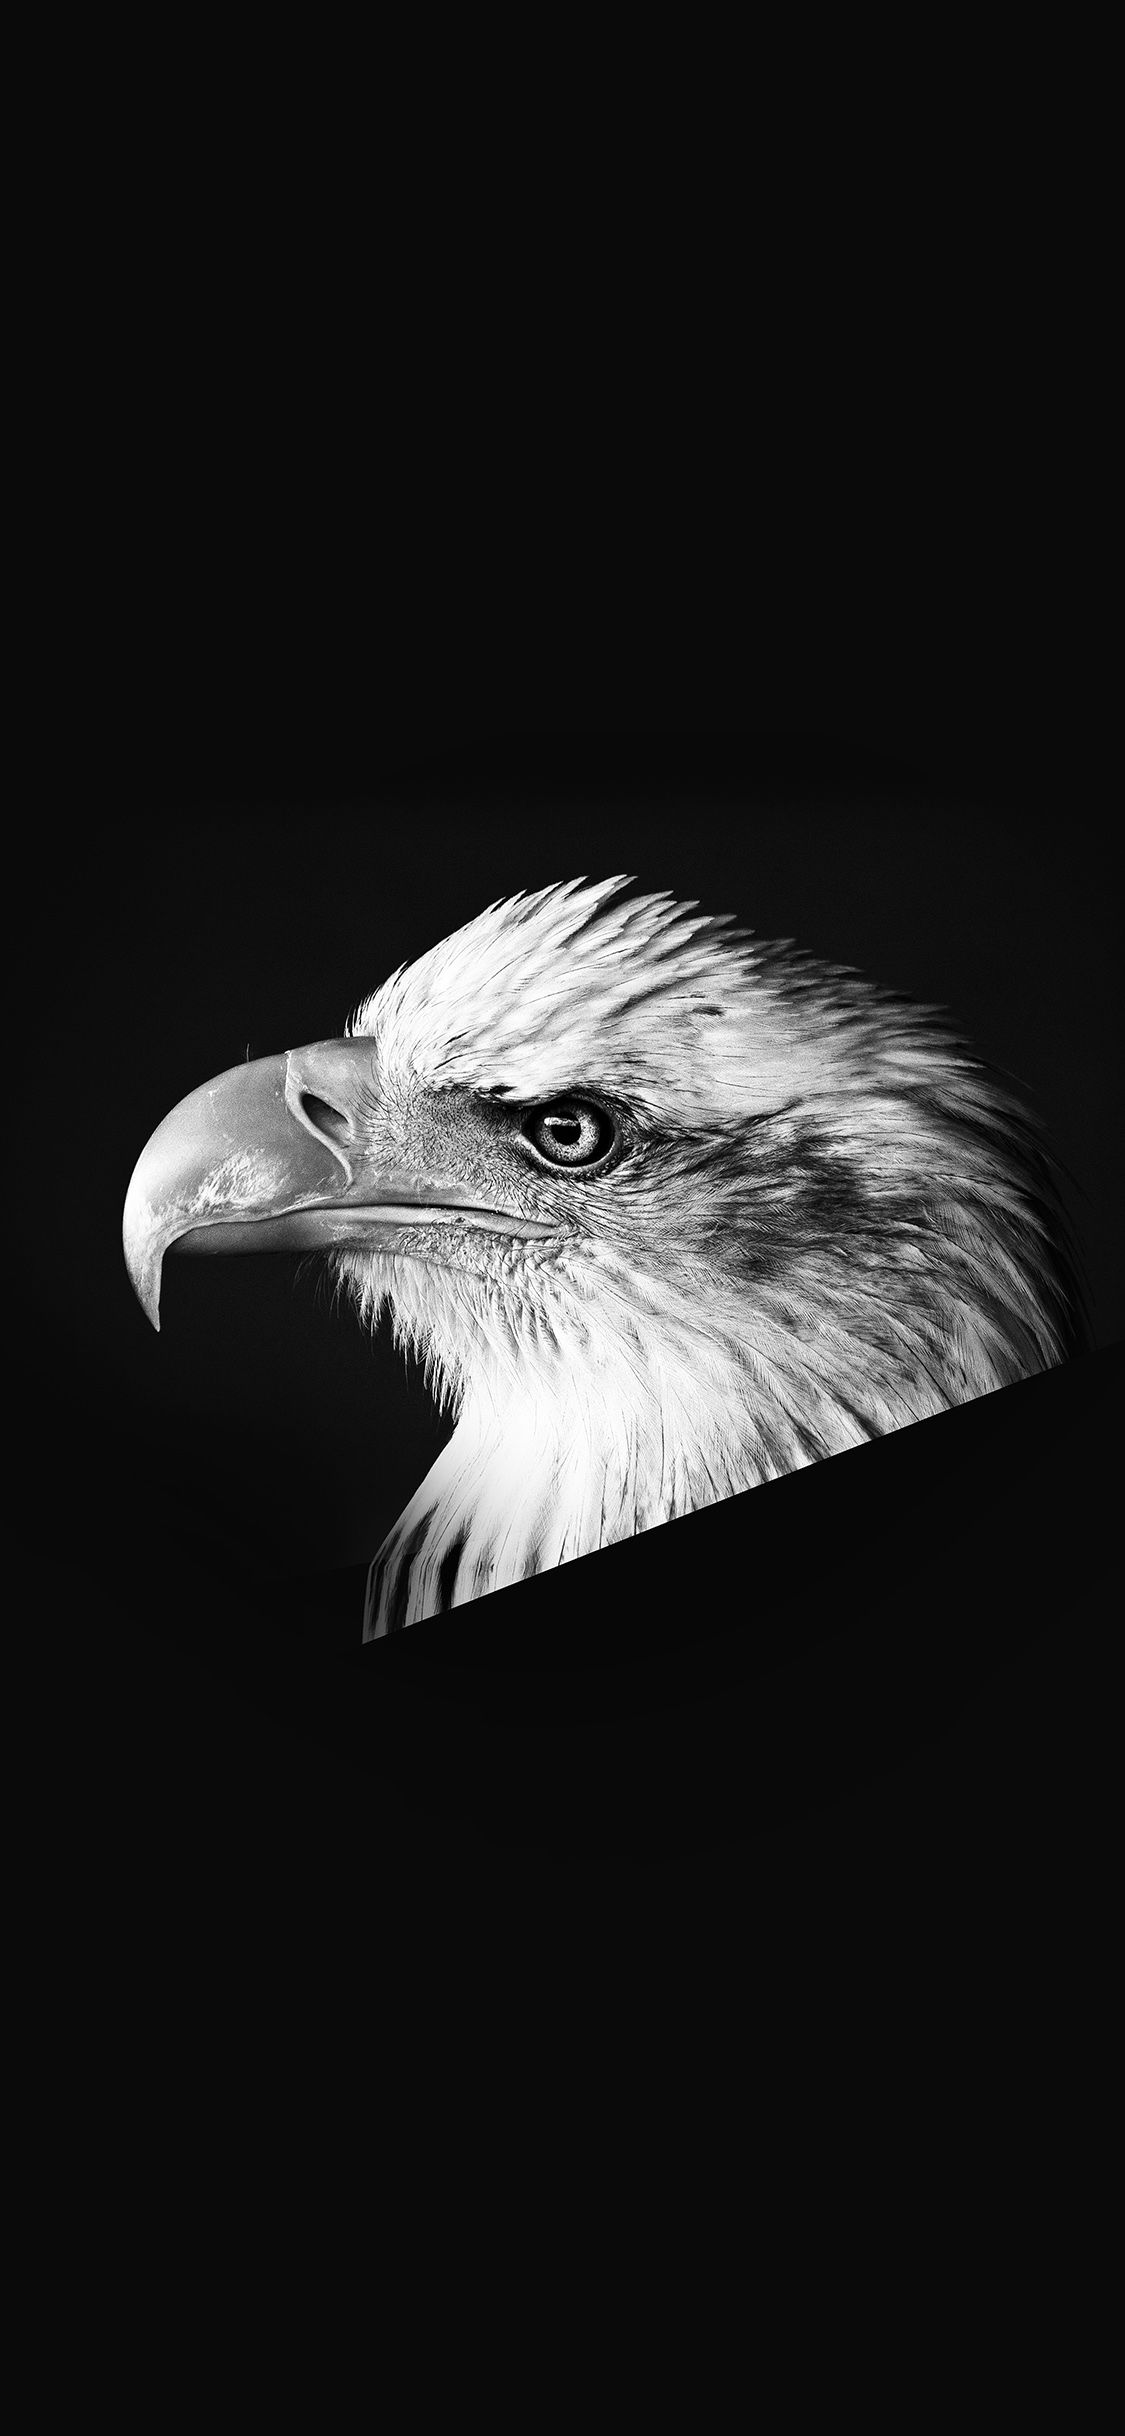 iPhone Eagle Wallpaper 4K Image